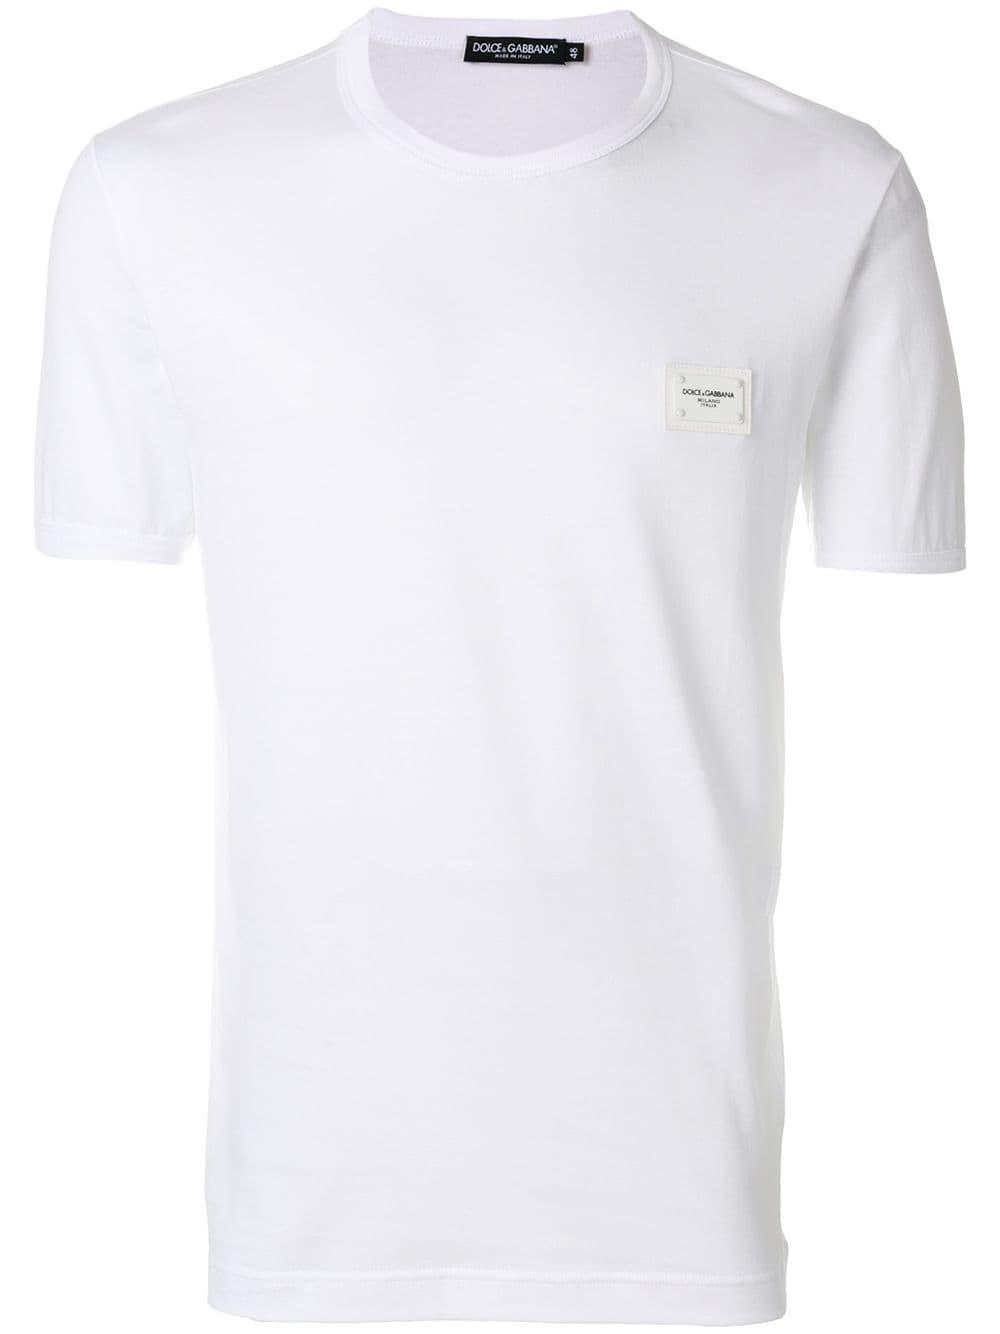 Dolce & Gabbana Cotton Logo Plaque T-shirt in White for Men - Lyst